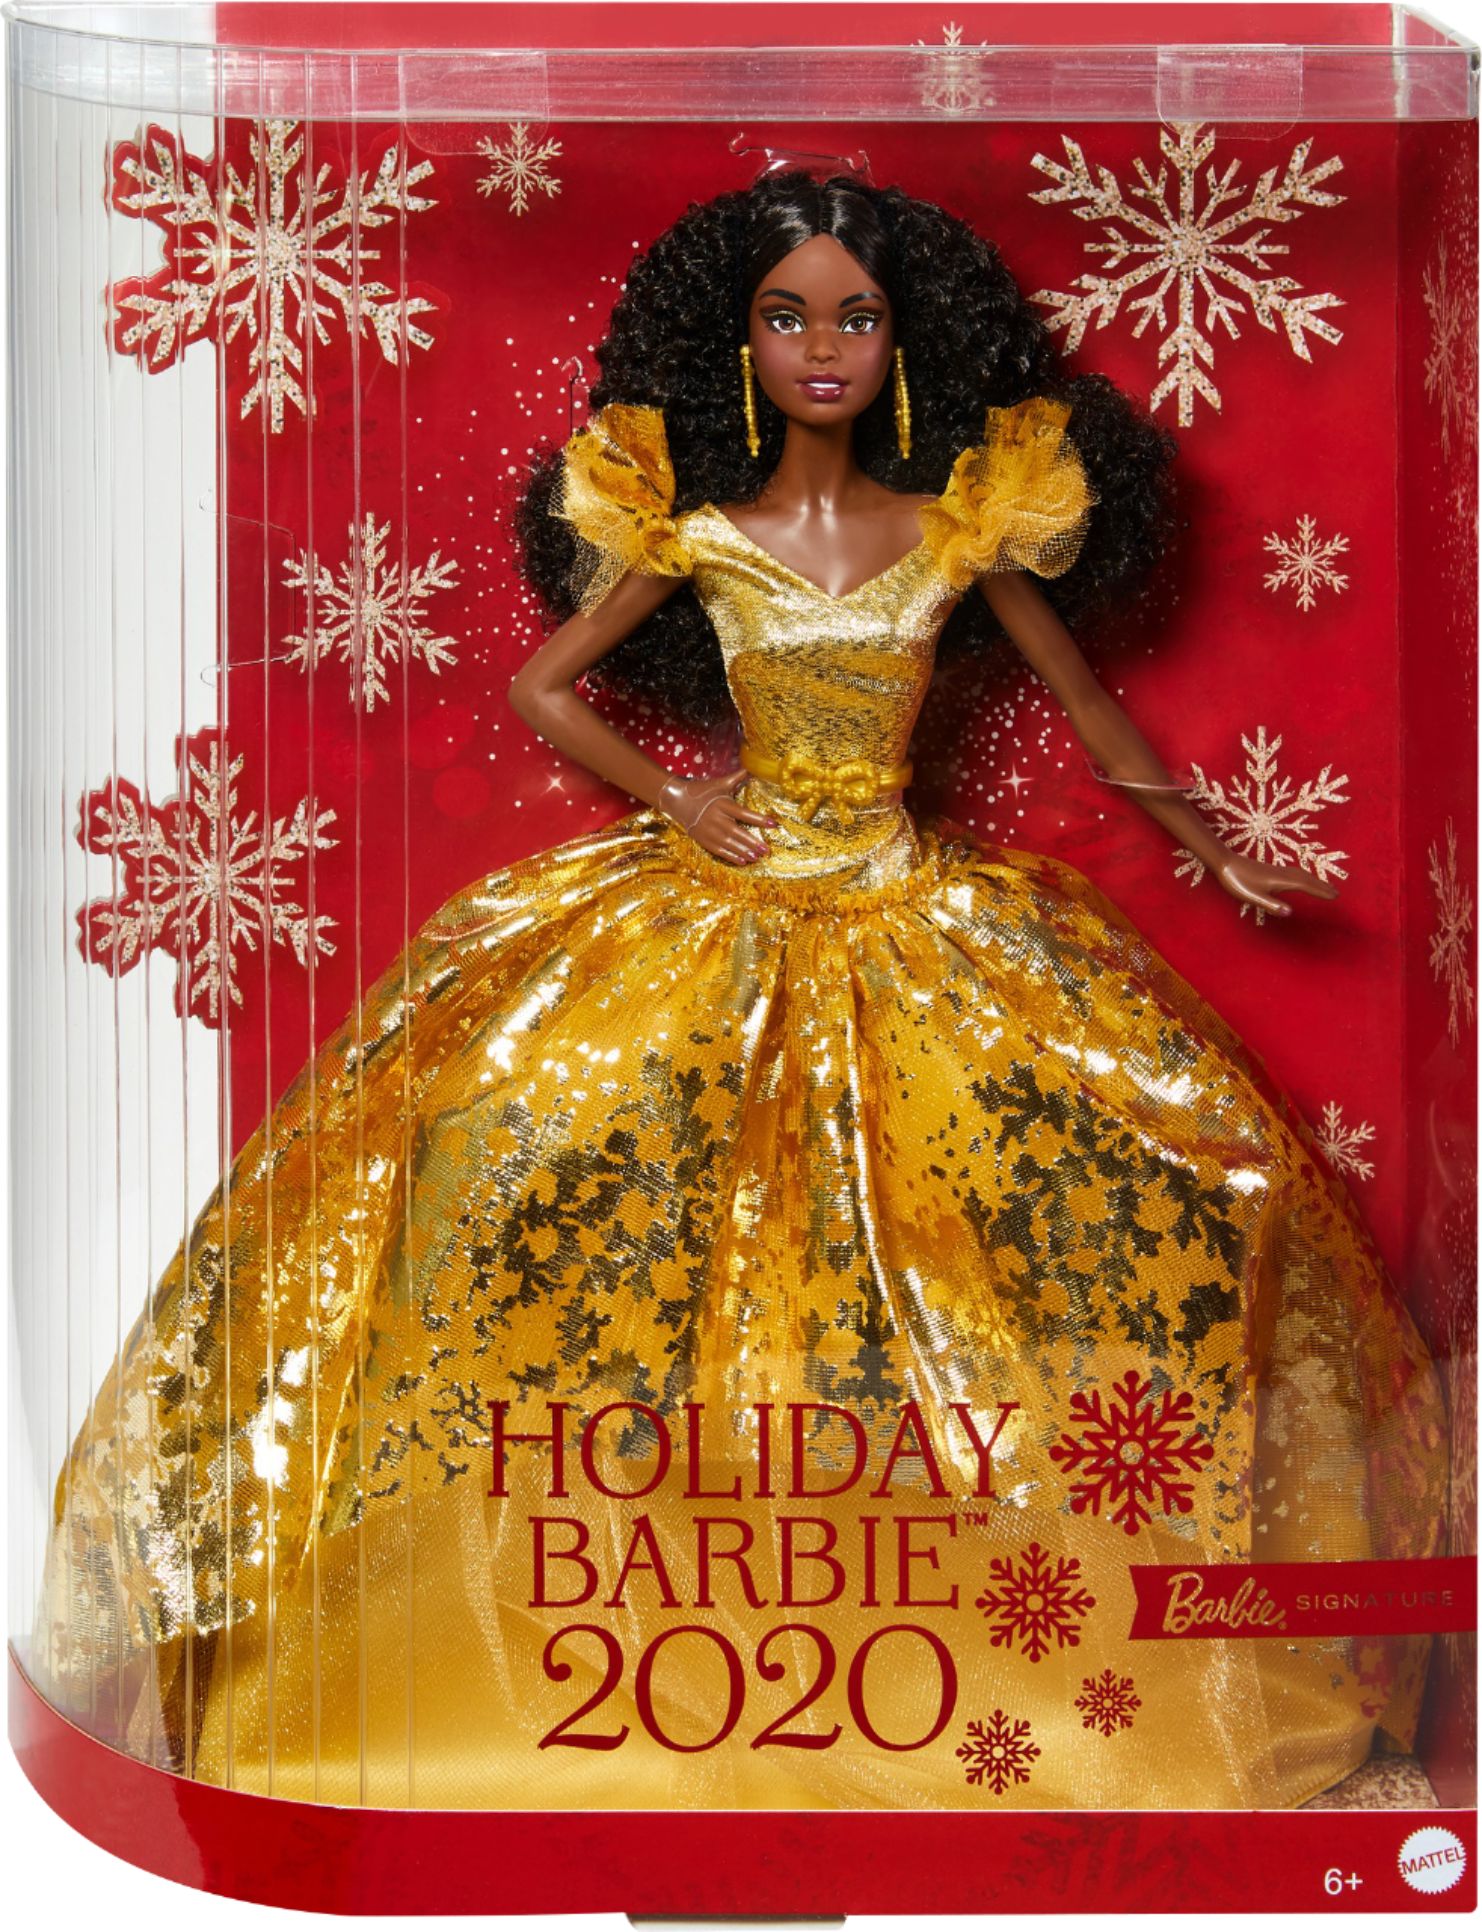 all holiday barbie dolls